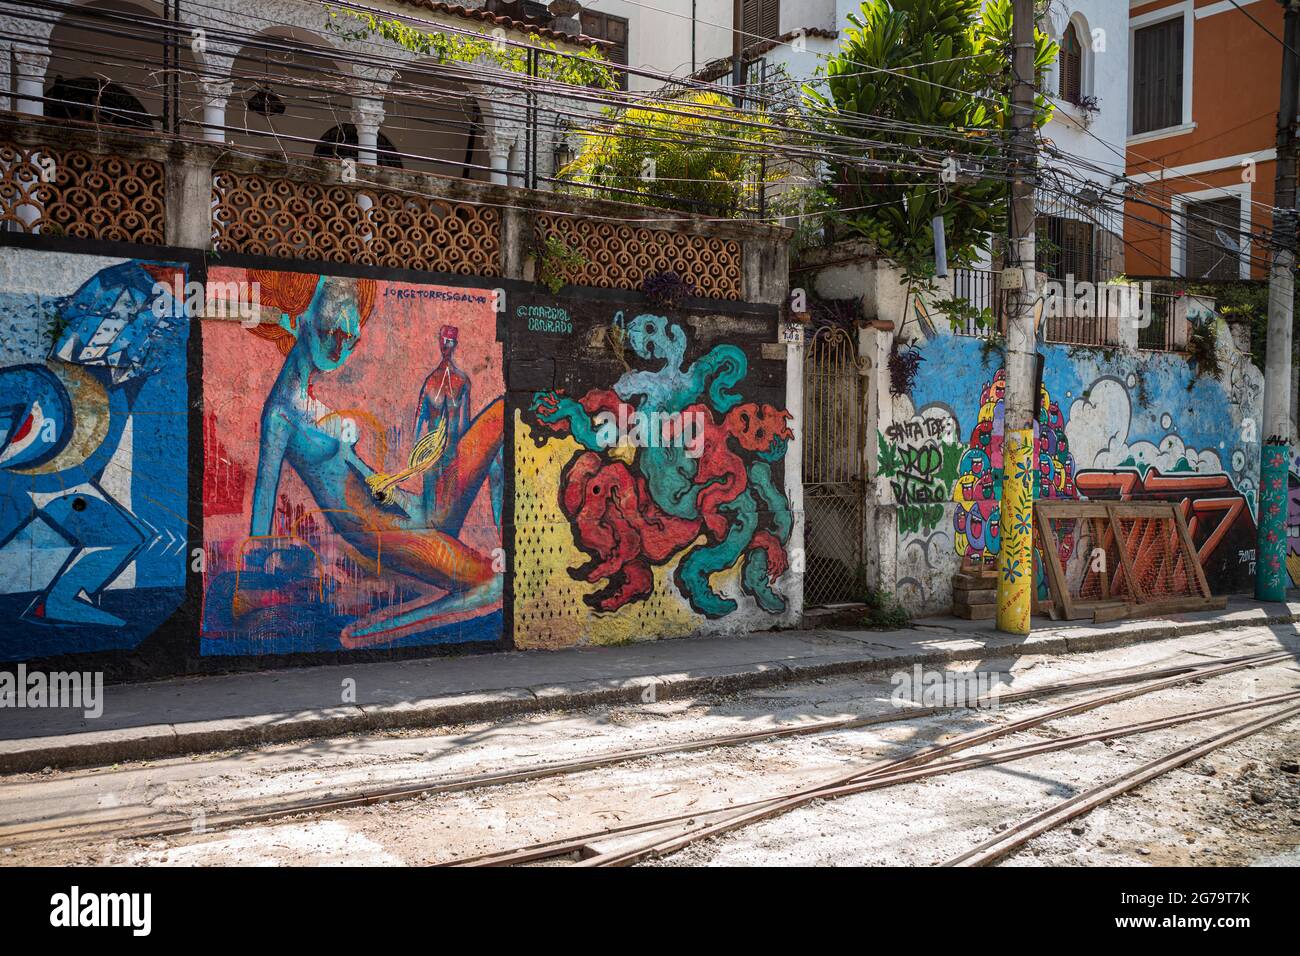 Graffiti street art murals line the streets and back alleys of Rio de Janeiro, especially in the Santa Teresa and Lapa neighborhoods. Stock Photo